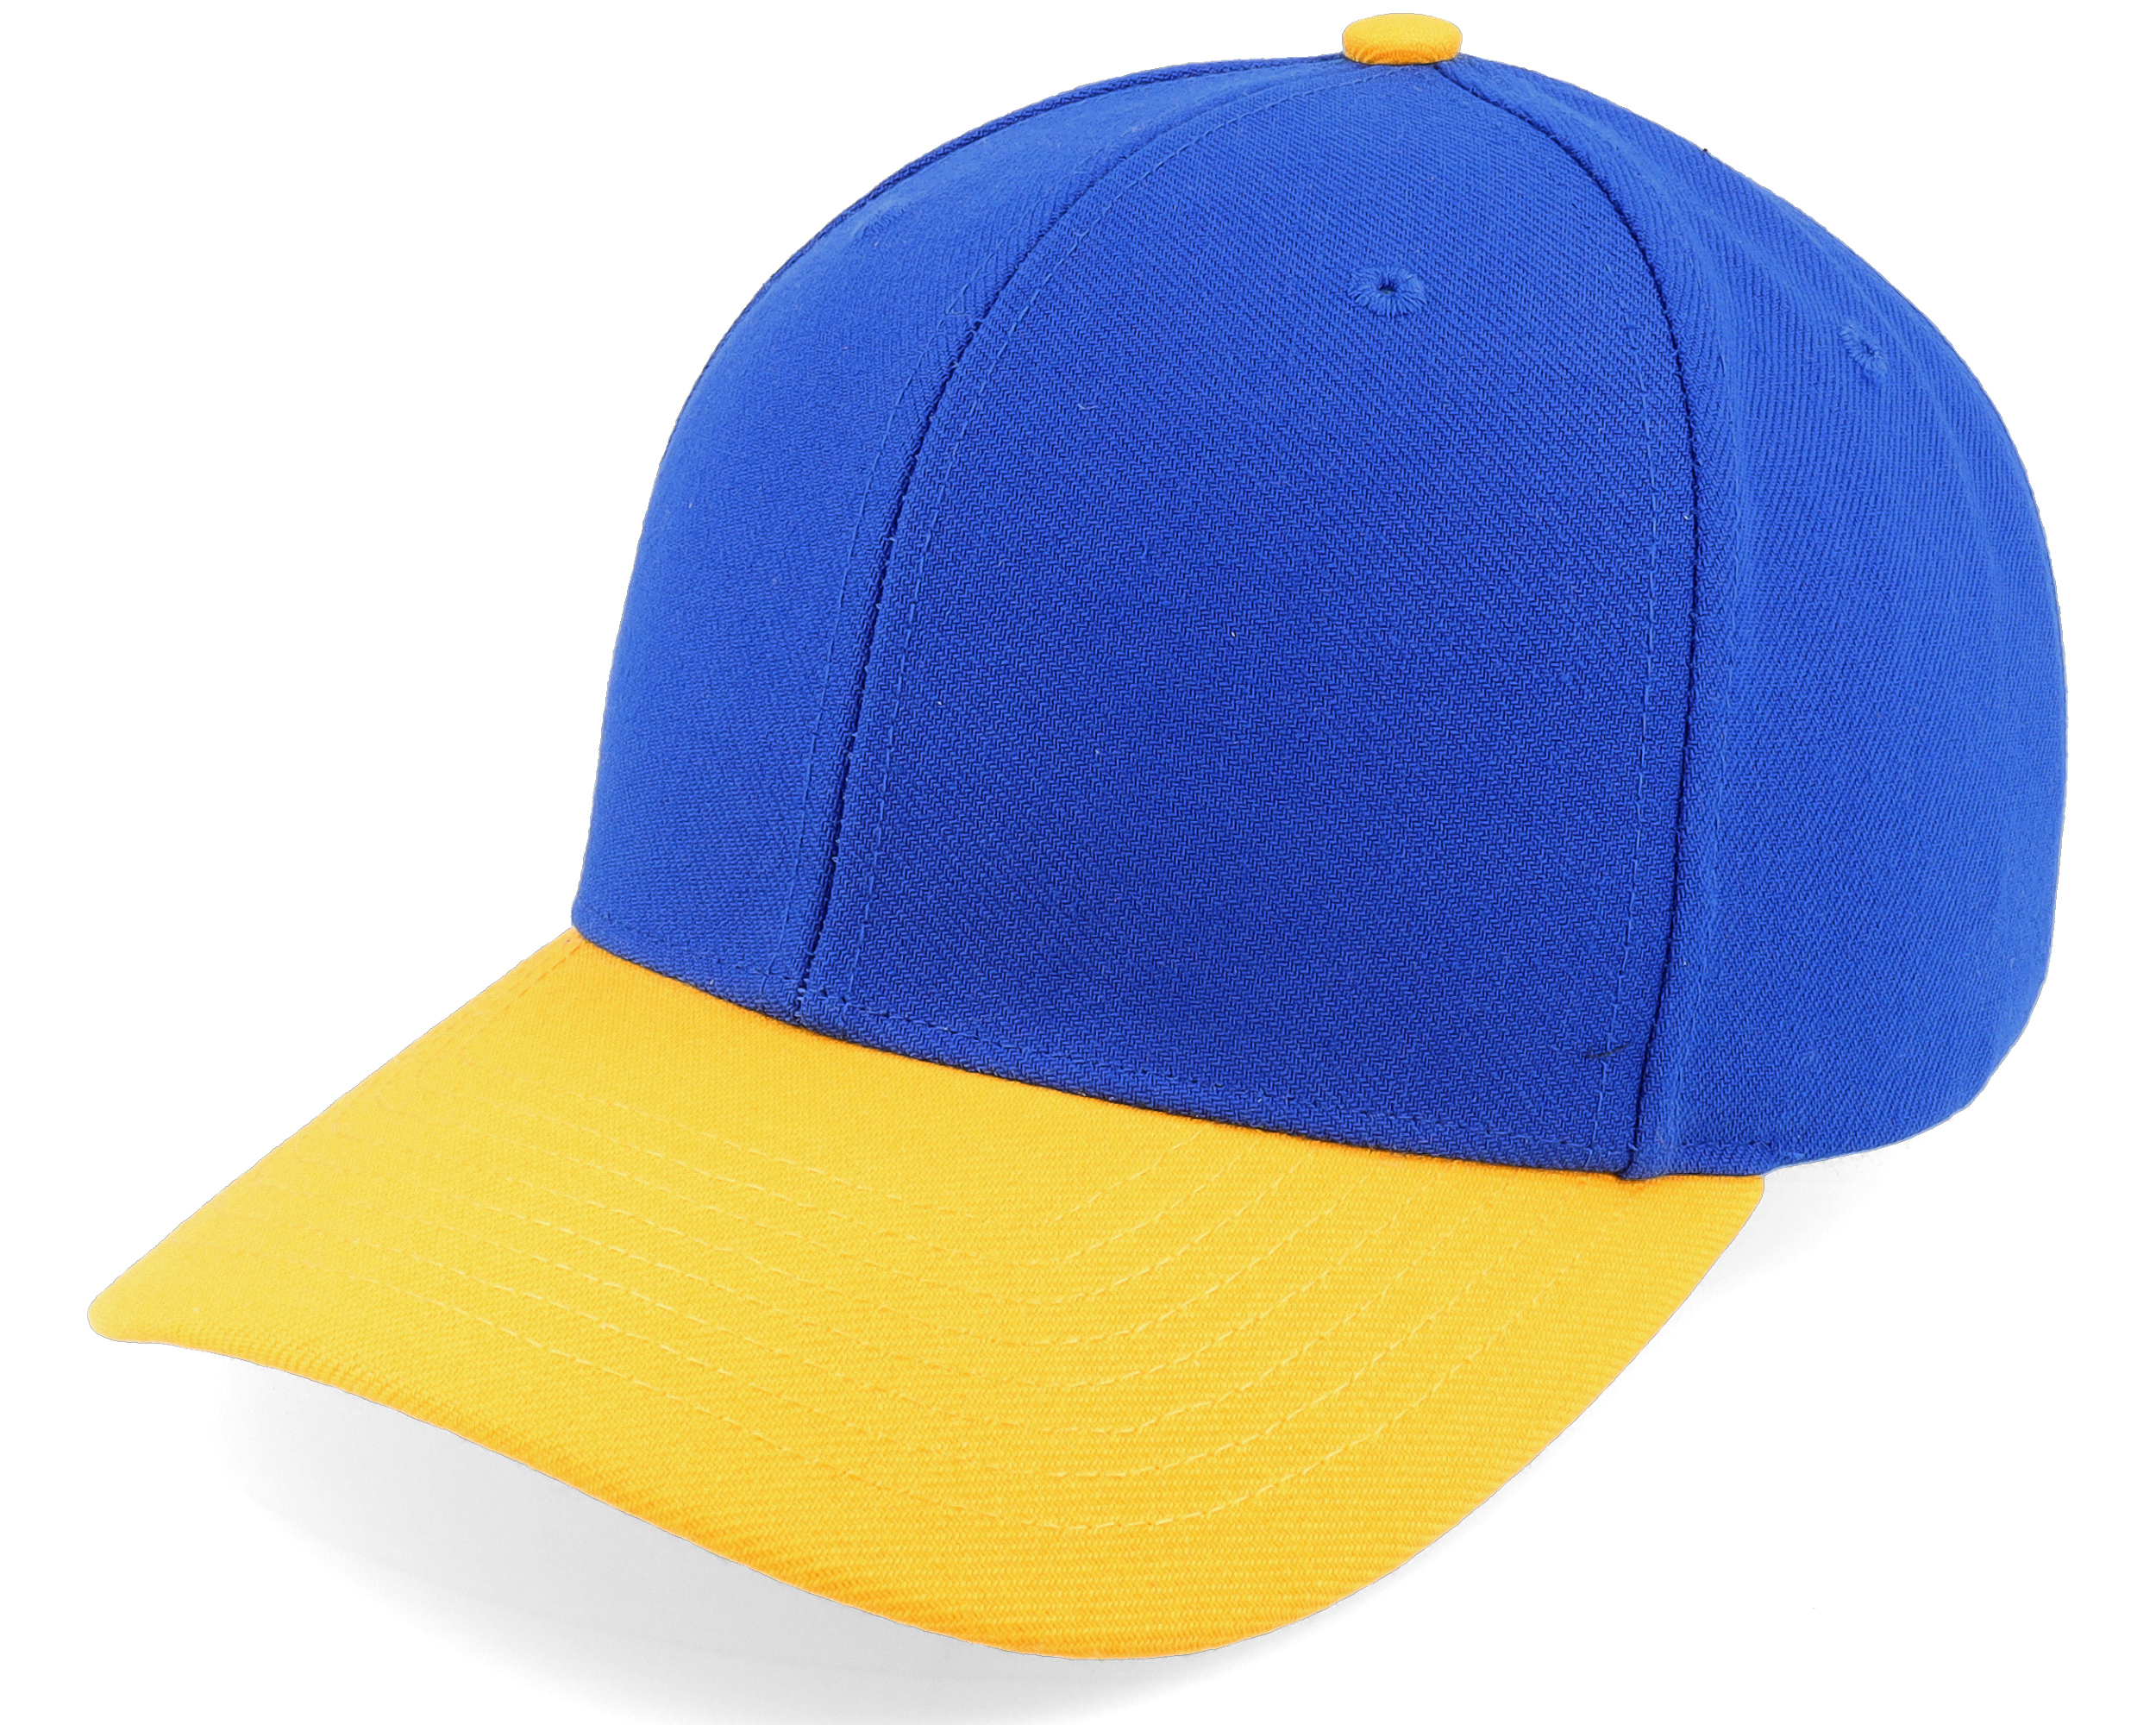 NHL St. Louis Blues Patch Gold Adjustable Hat, Men's, Yellow